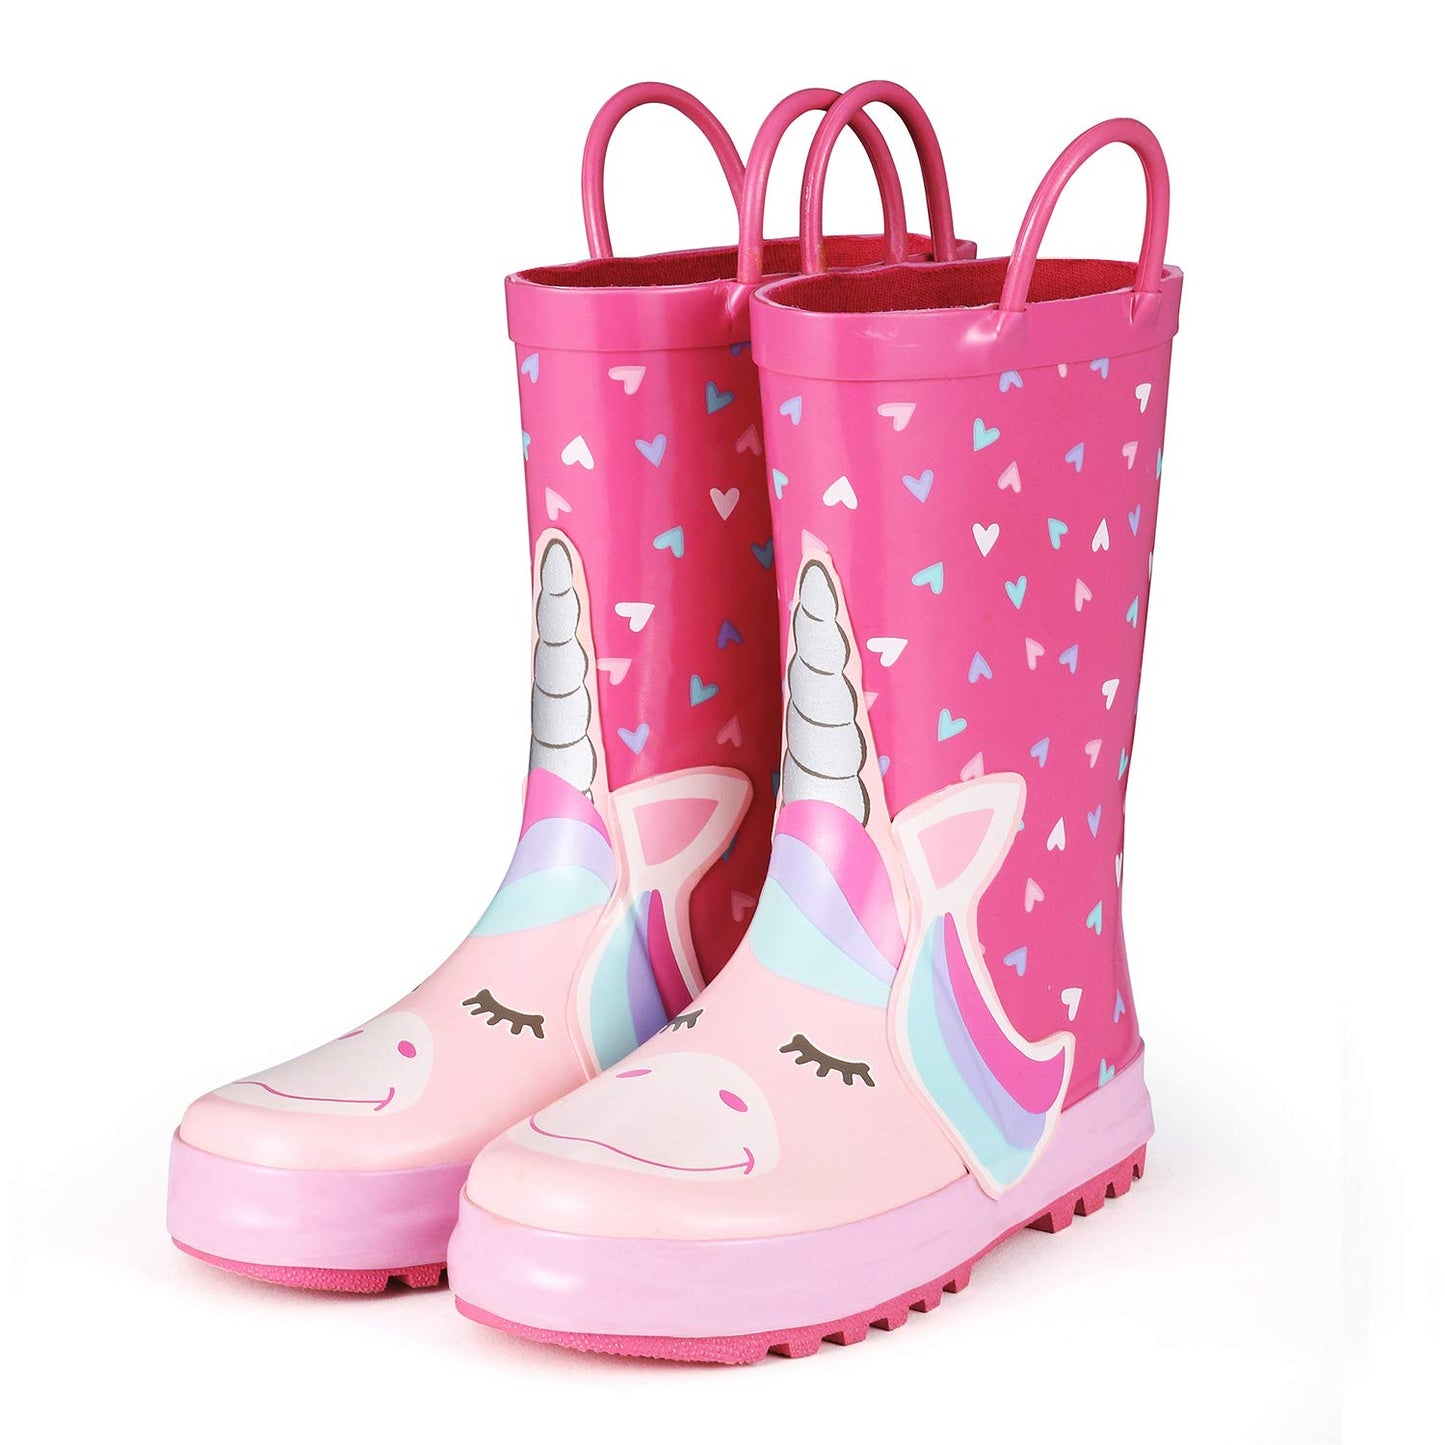 Splash Fun Girls Rain Boots (ages 12 months - 7 years)